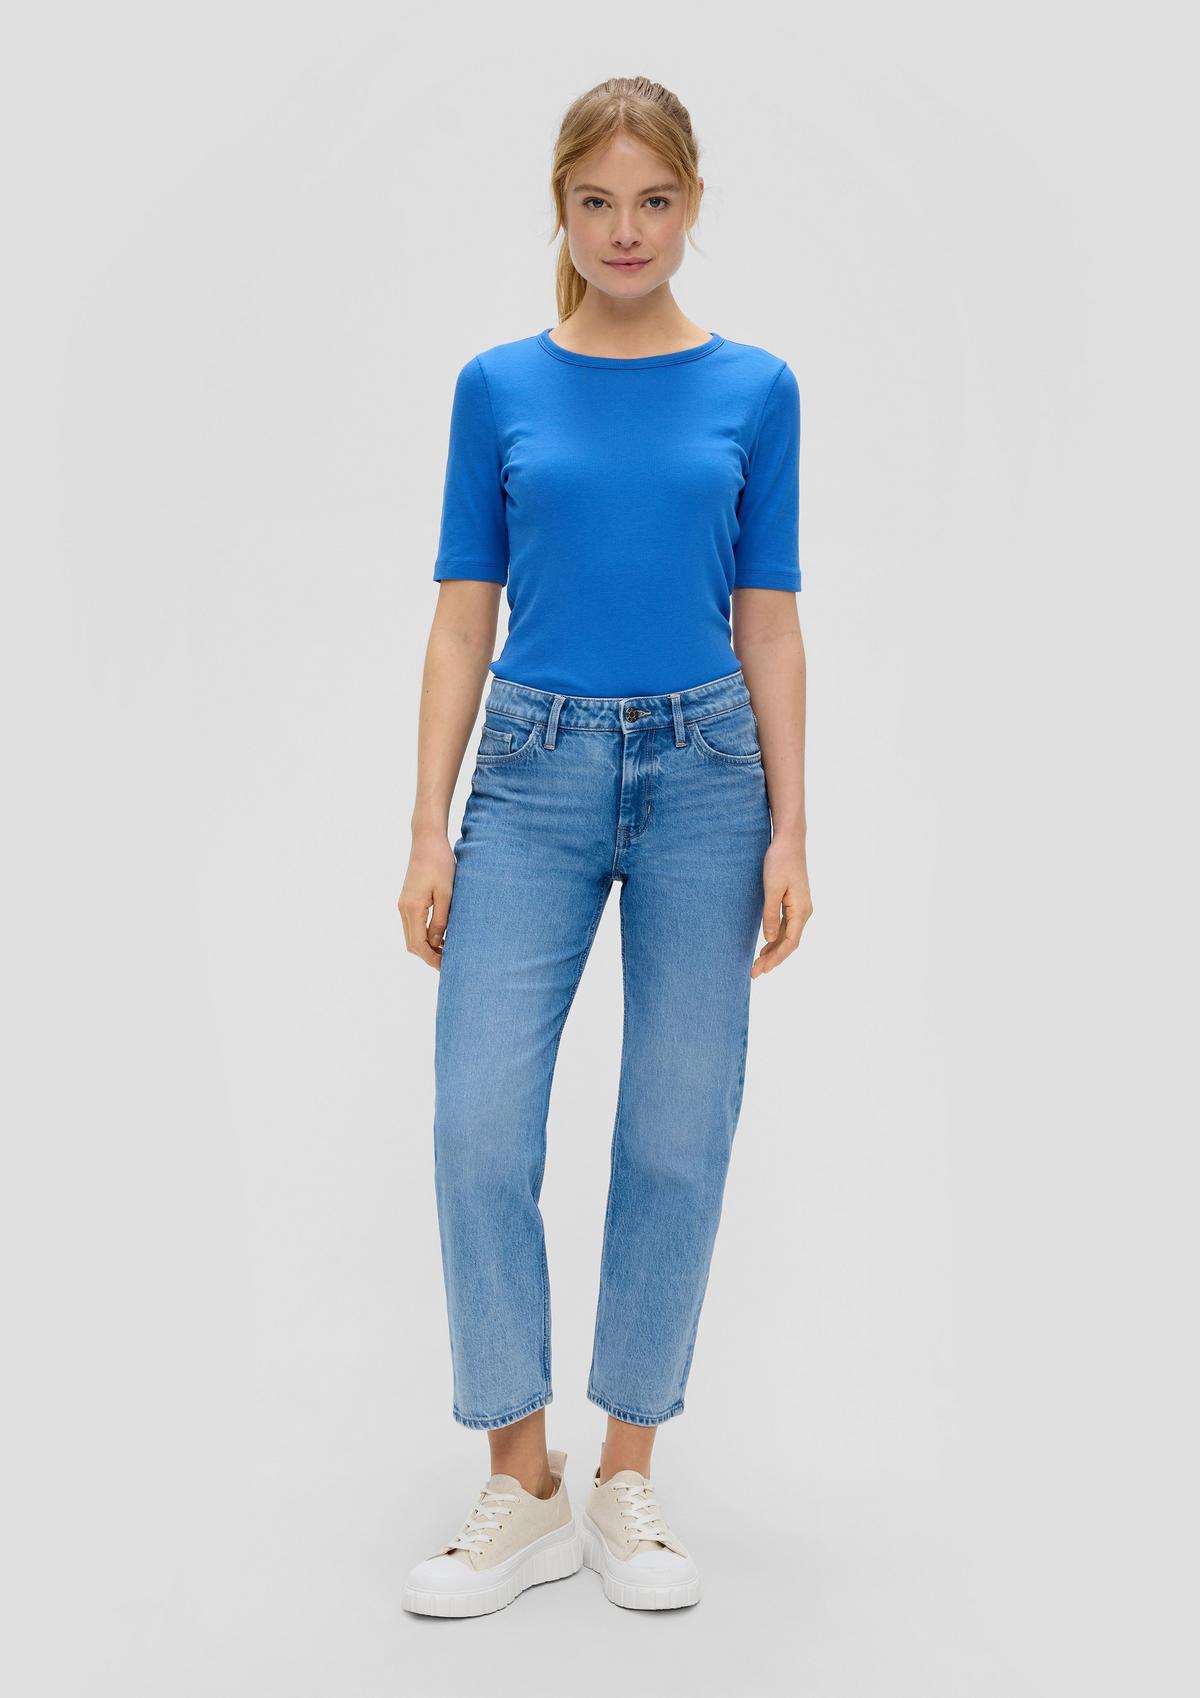 s.Oliver 360° jeans/skrajšane jeans hlače Karolin/kroj Regular Fit/Mid Rise/ravne hlačnice/vzorec po celotnem oblačilu